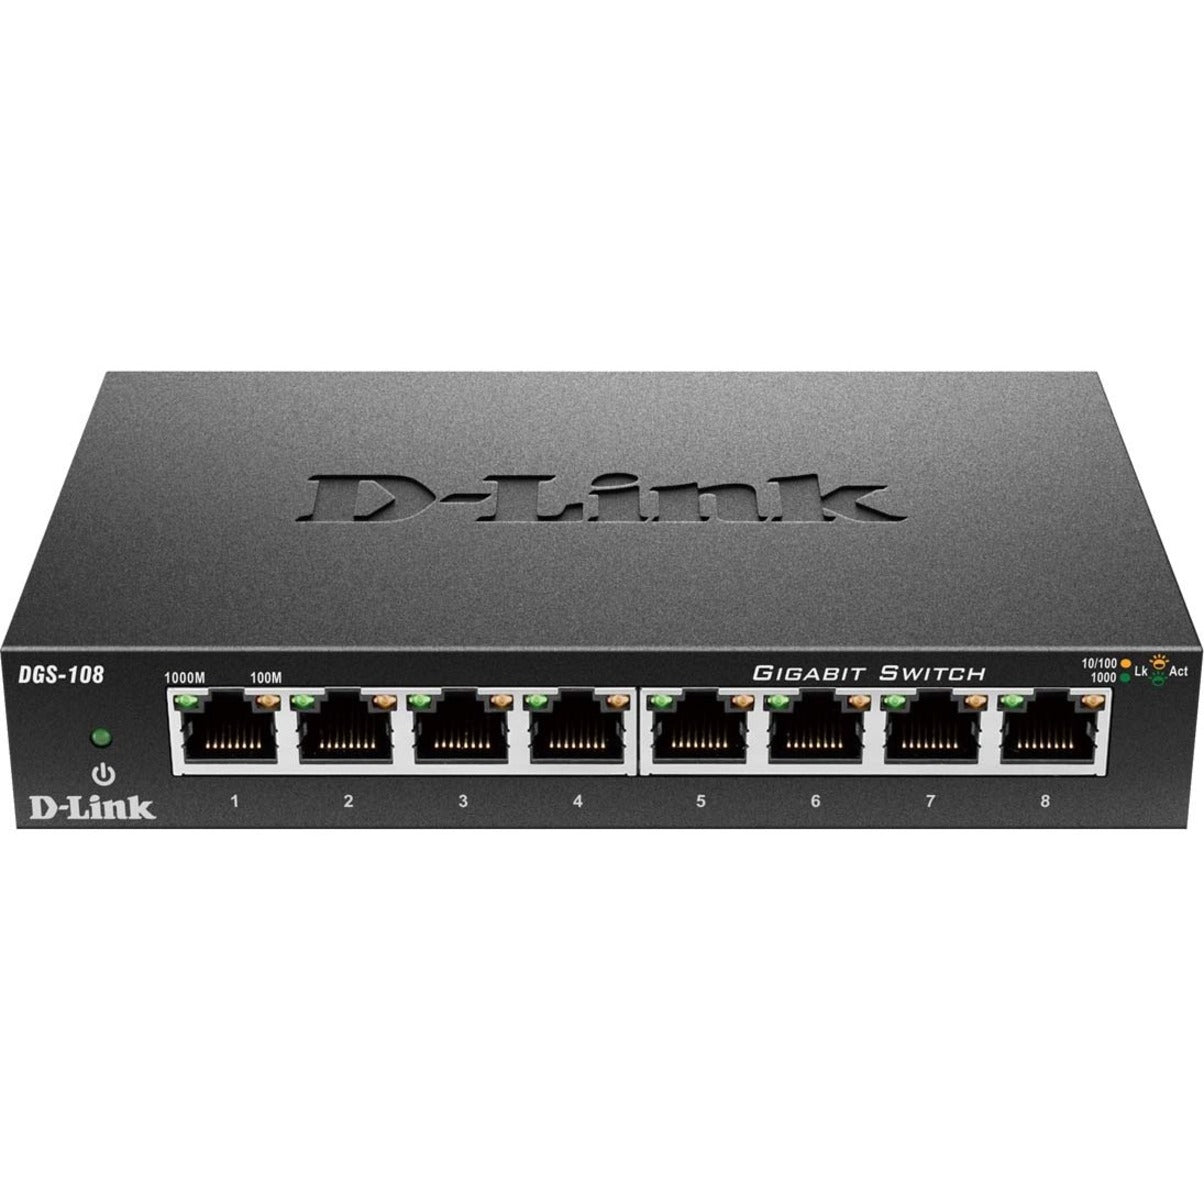 D-Link DGS-108 Unmanaged 8-Port Gigabit Ethernet Switch, Metal Desktop, 5-Year Warranty, Free Technical Support